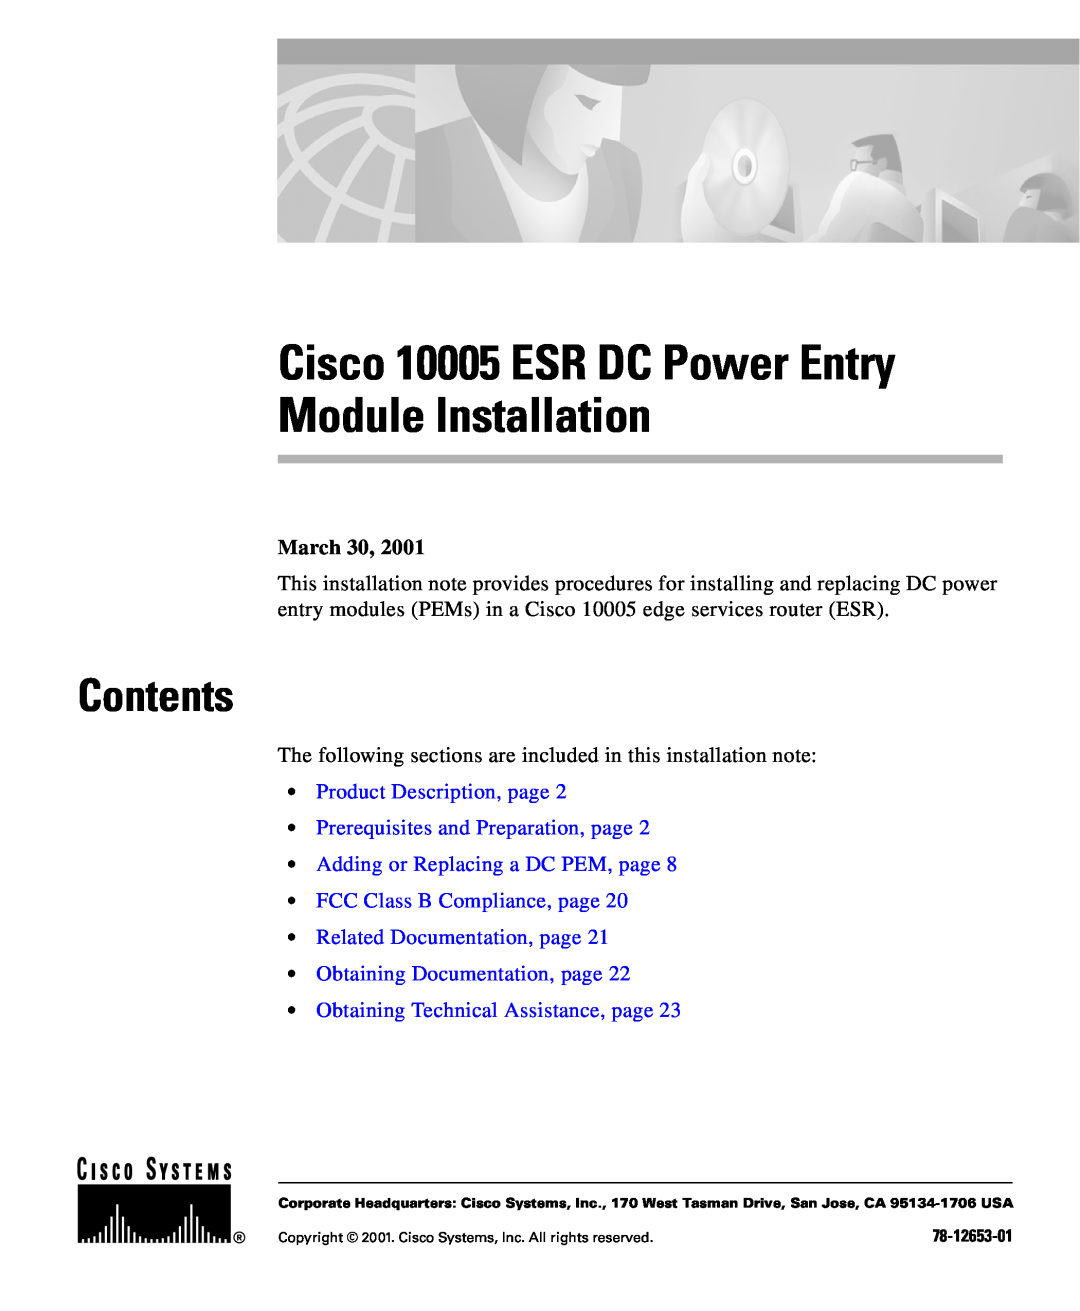 Cisco Systems manual Contents, Cisco 10005 ESR DC Power Entry Module Installation, March 30 